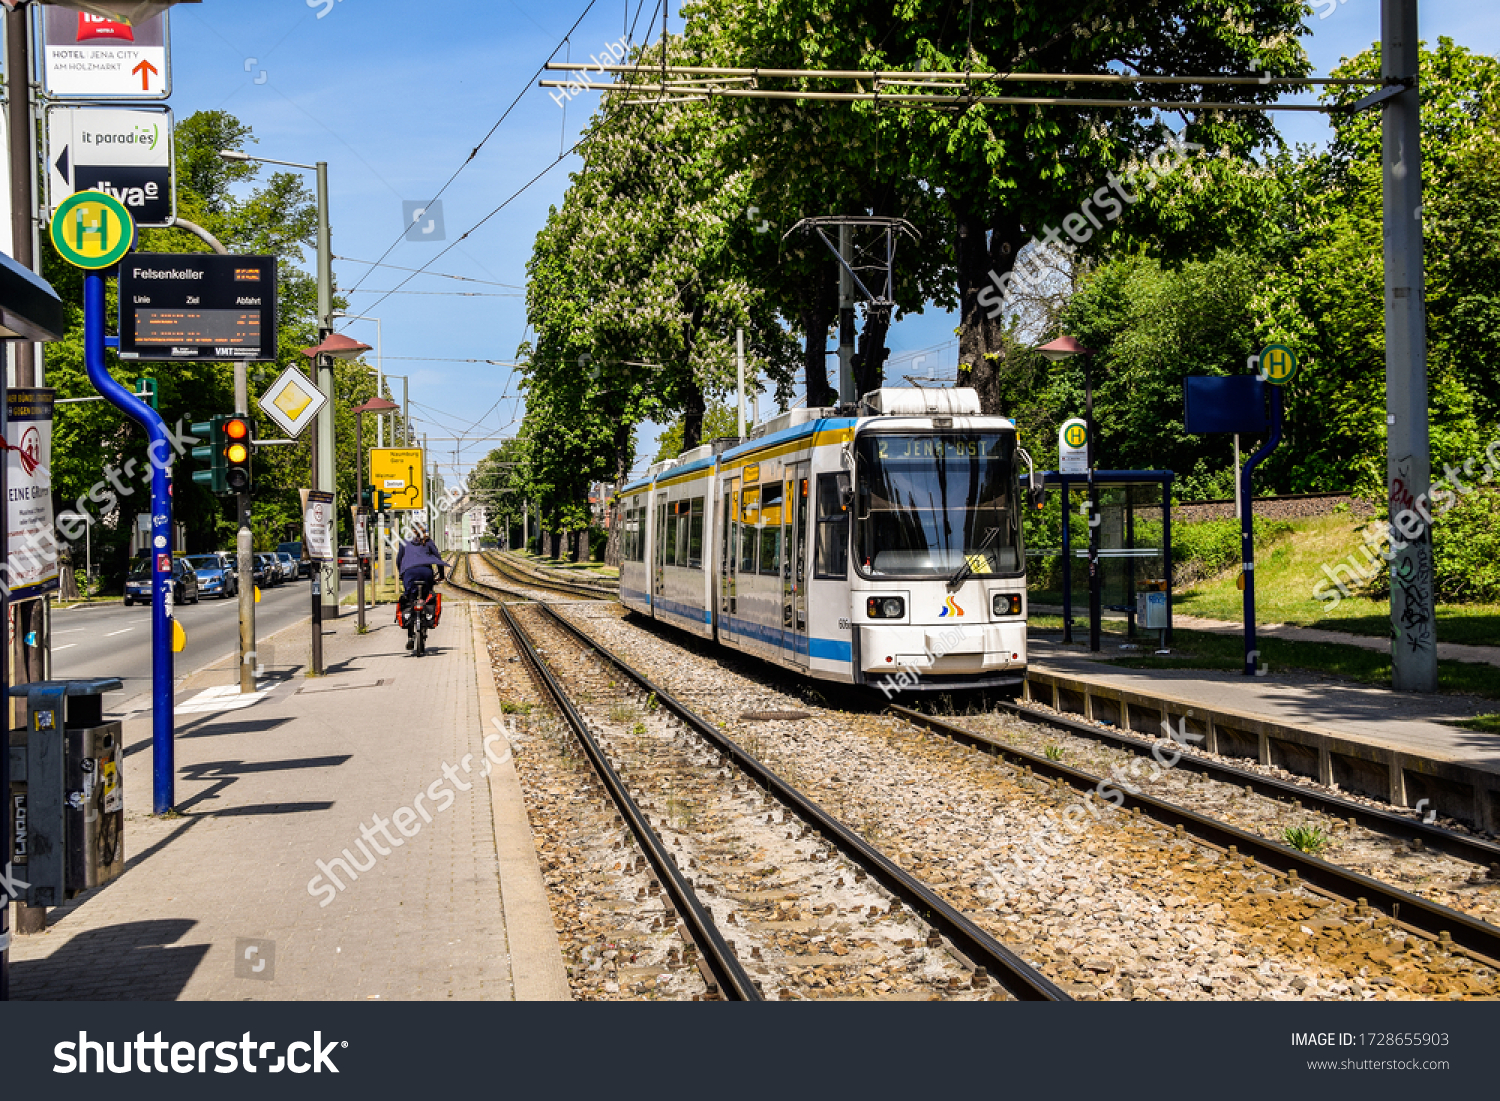 Dhaka in straßenbahn würzburg Düsseldorf